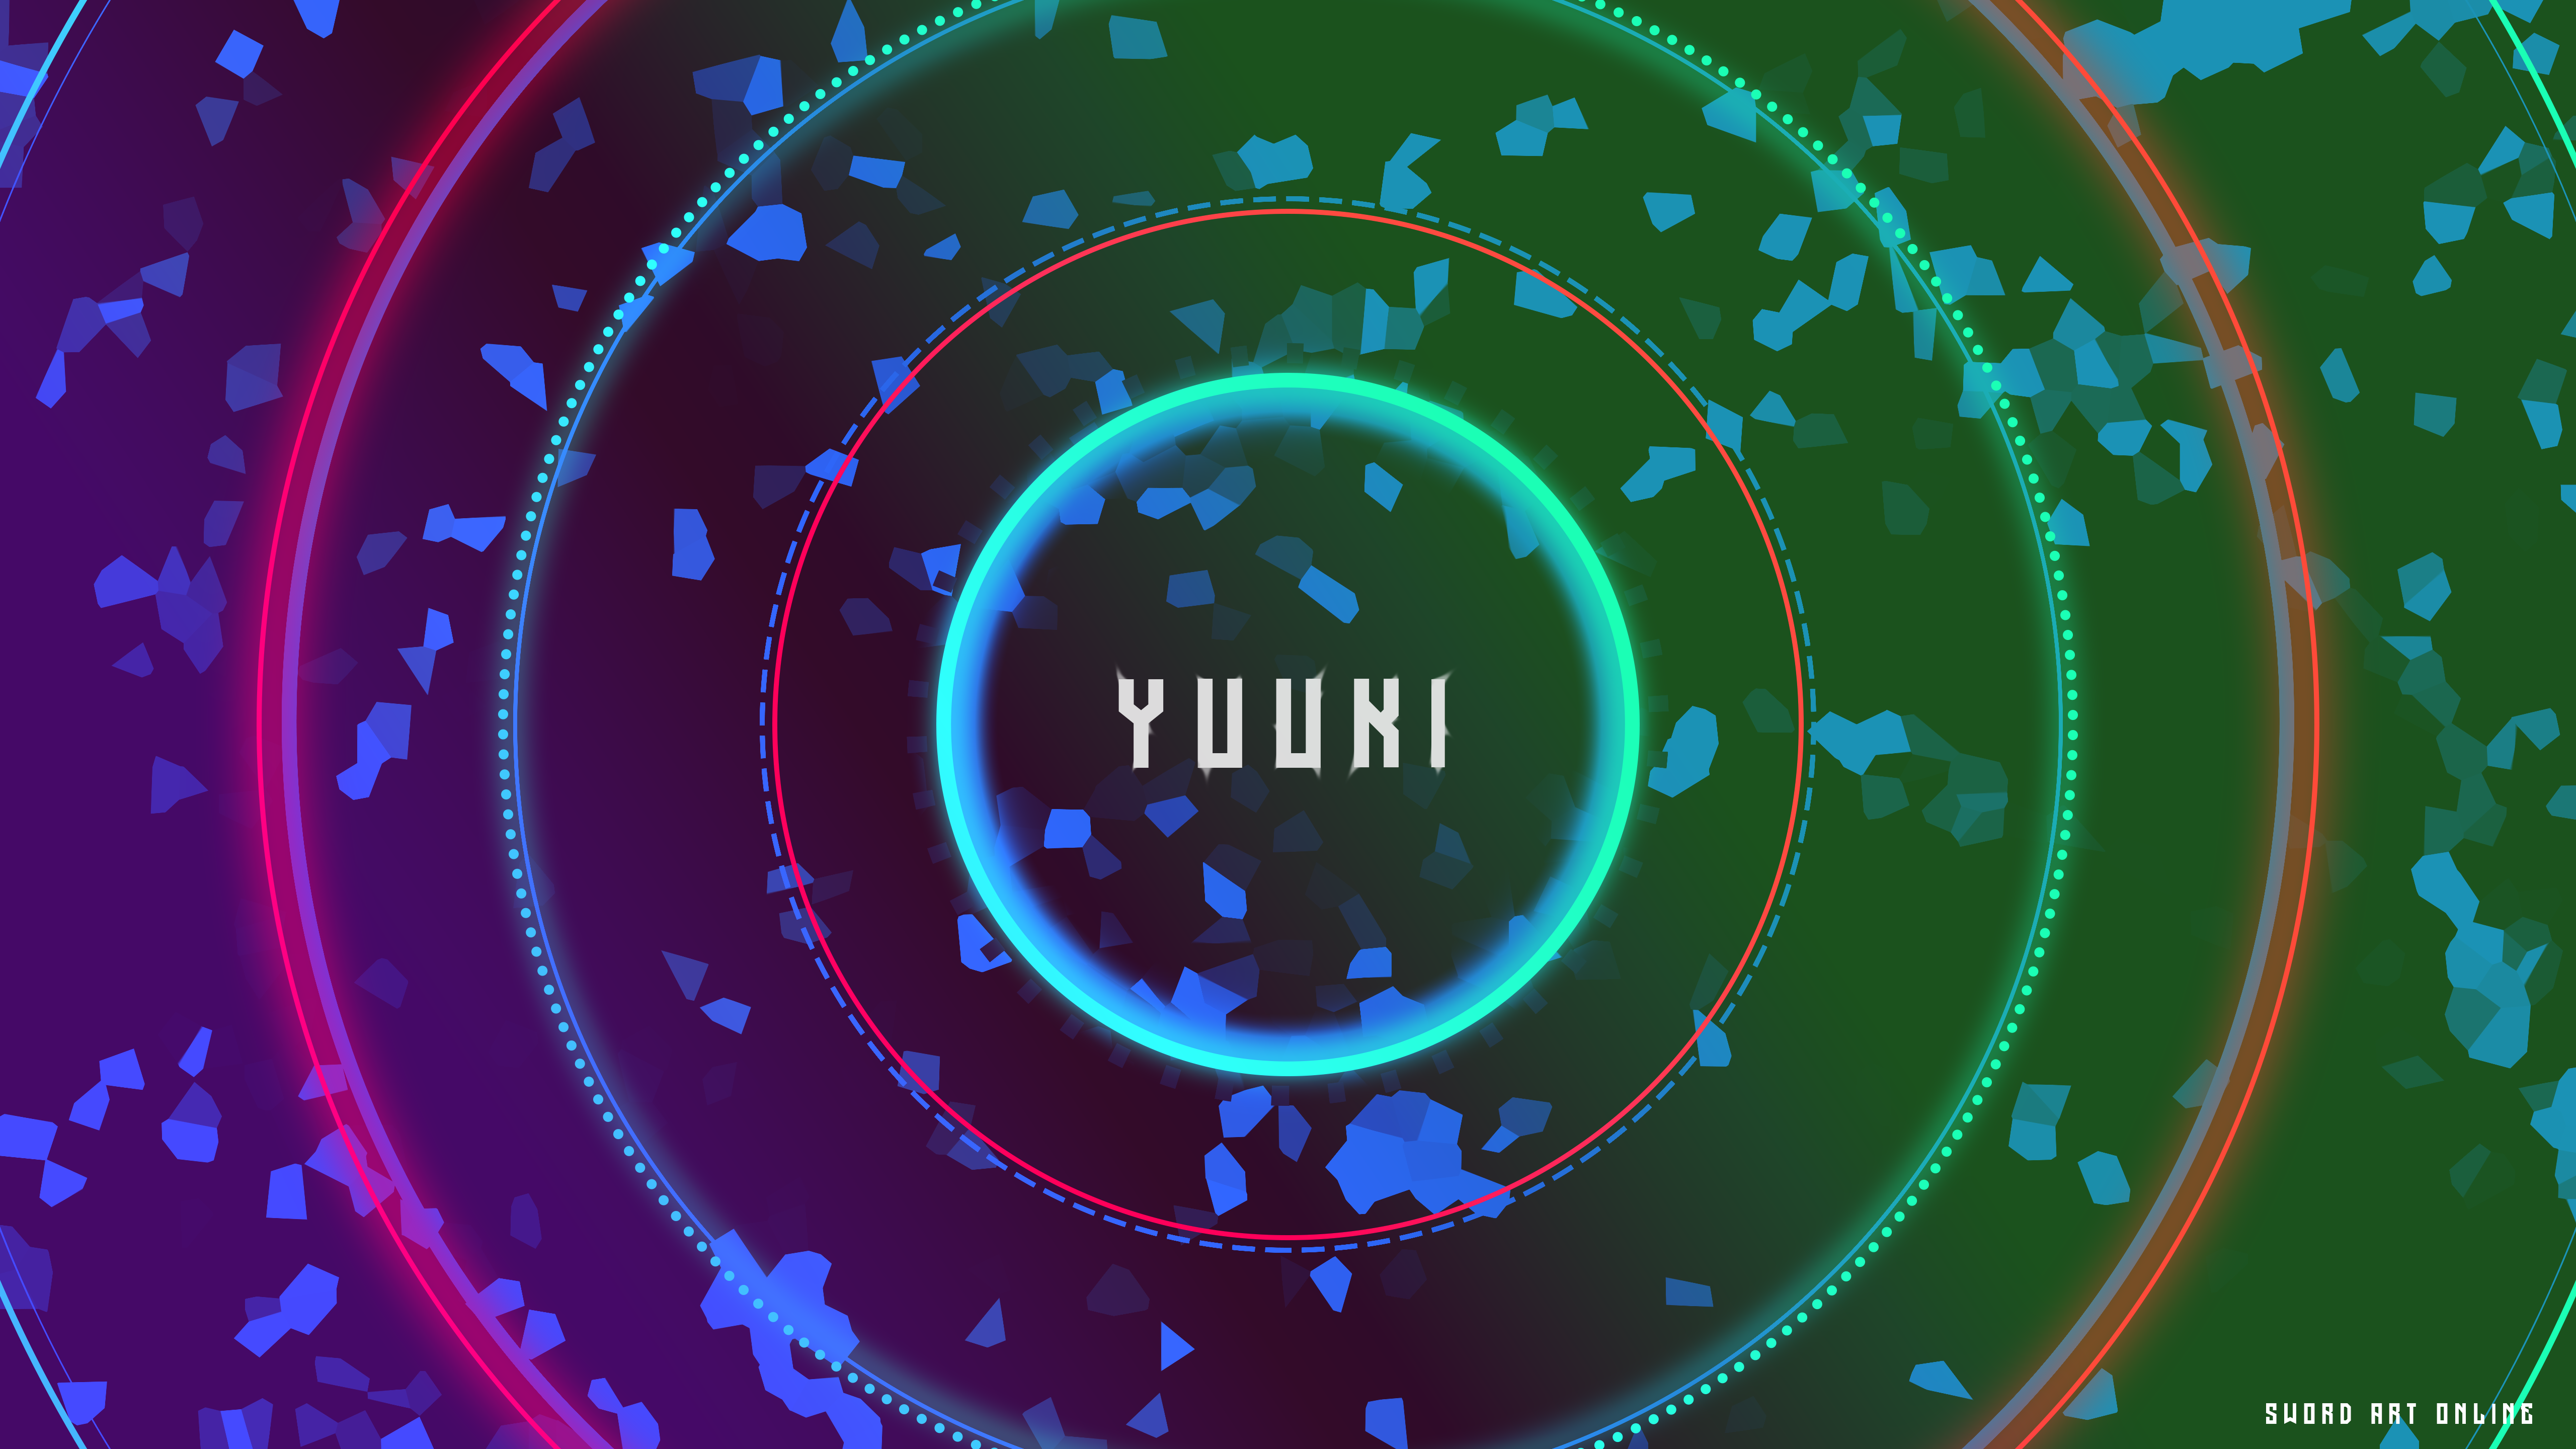 Yuuki by Sonixx